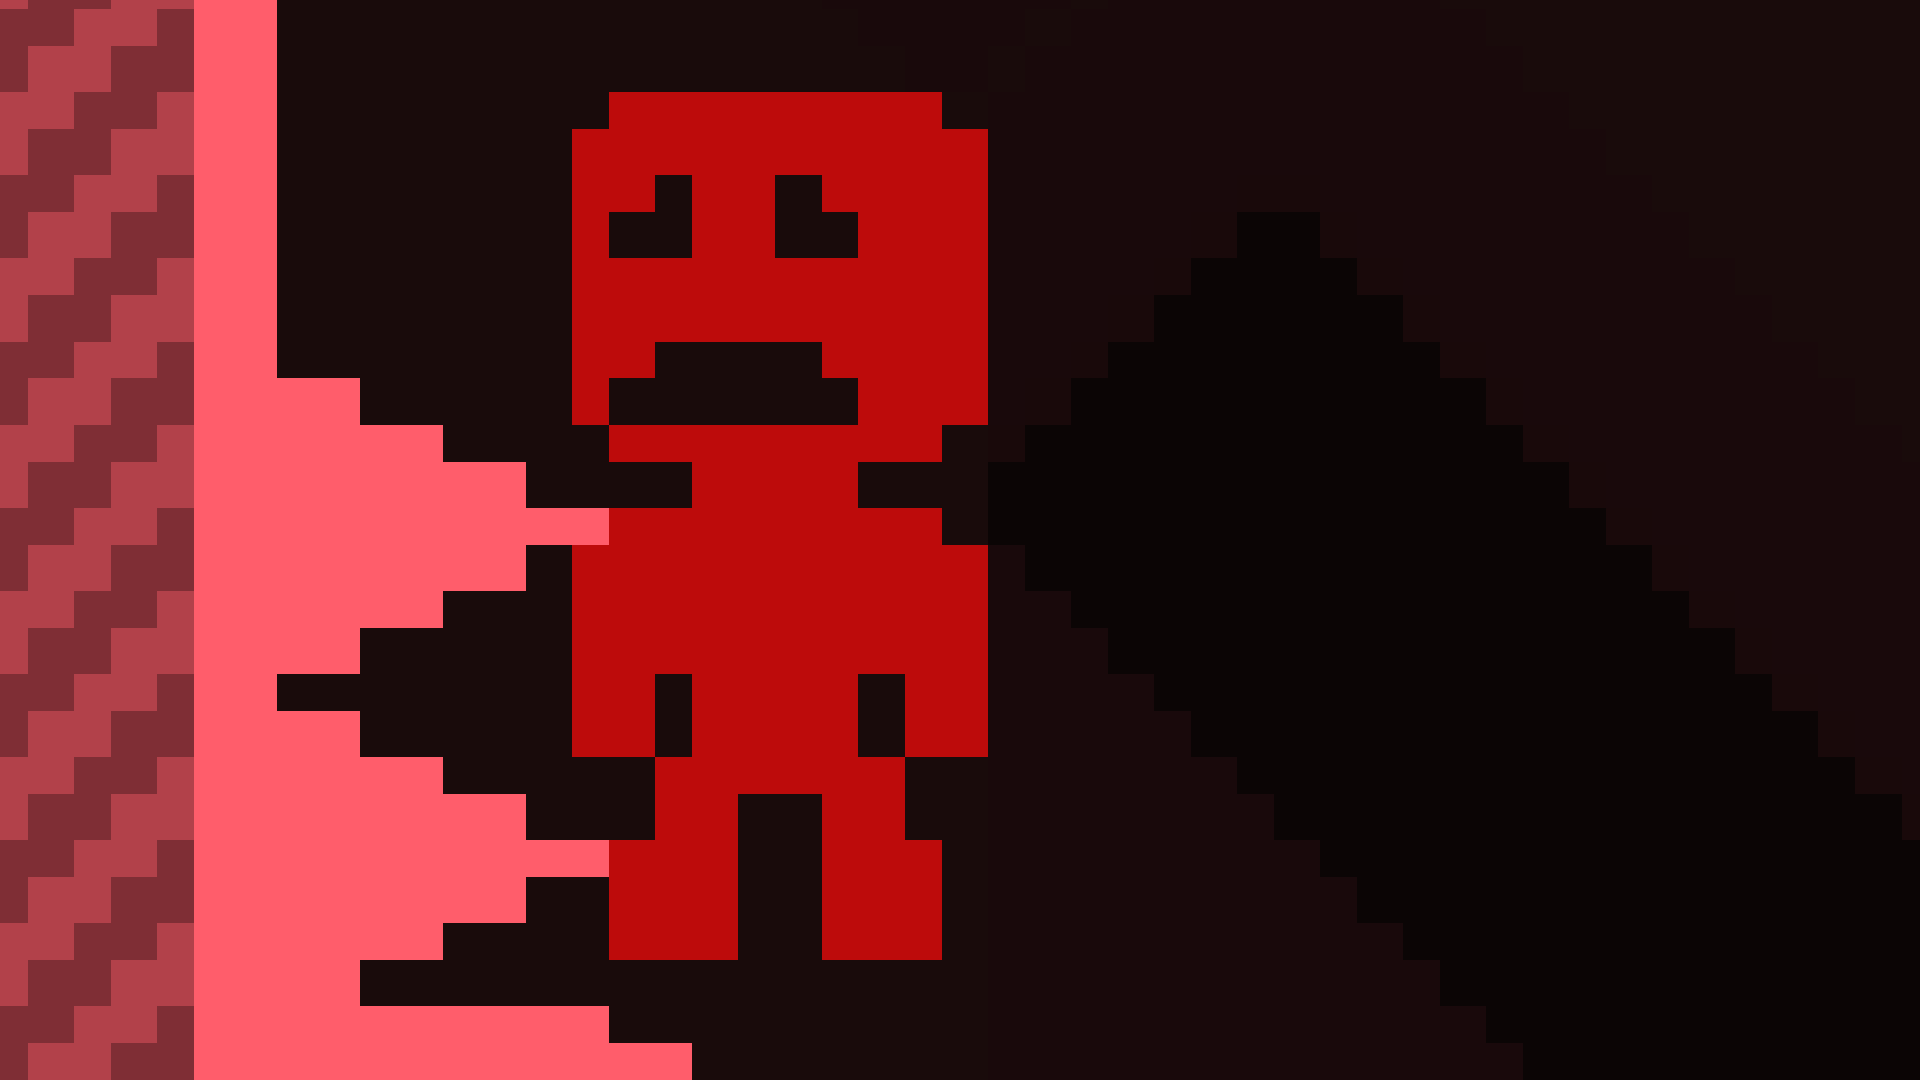 VVVVVV Indie Games Video Games Pixels Red 1920x1080